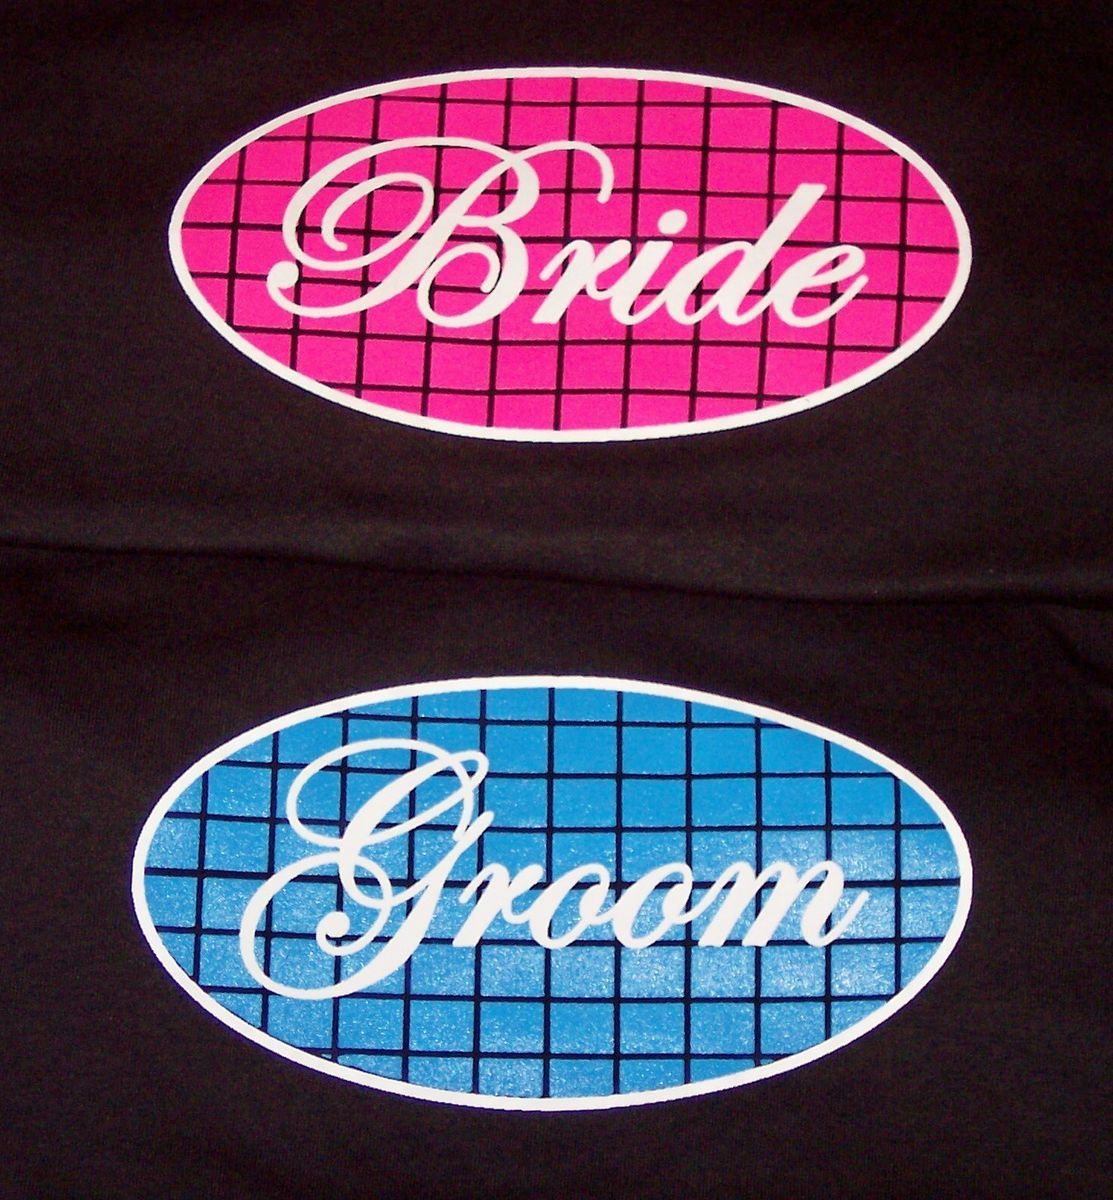 New Bride And Groom Matching Black Wedding T Shirts 2 Shirts